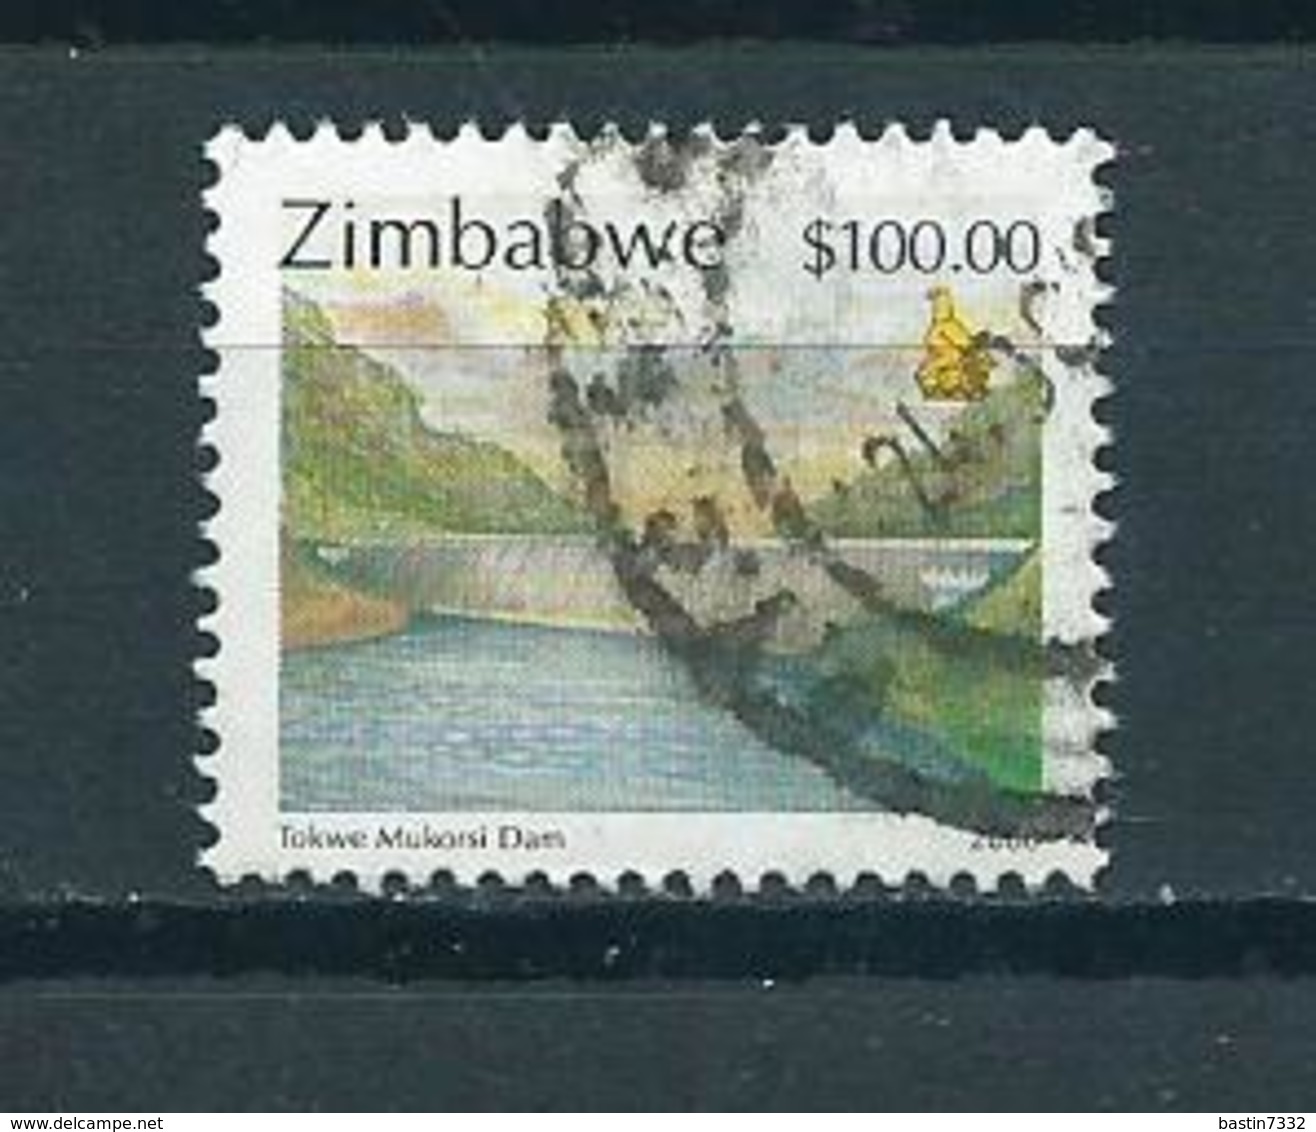 2000 Zimbabwe Mukorsi $100.00 Used/gebruikt/oblitere - Zimbabwe (1980-...)